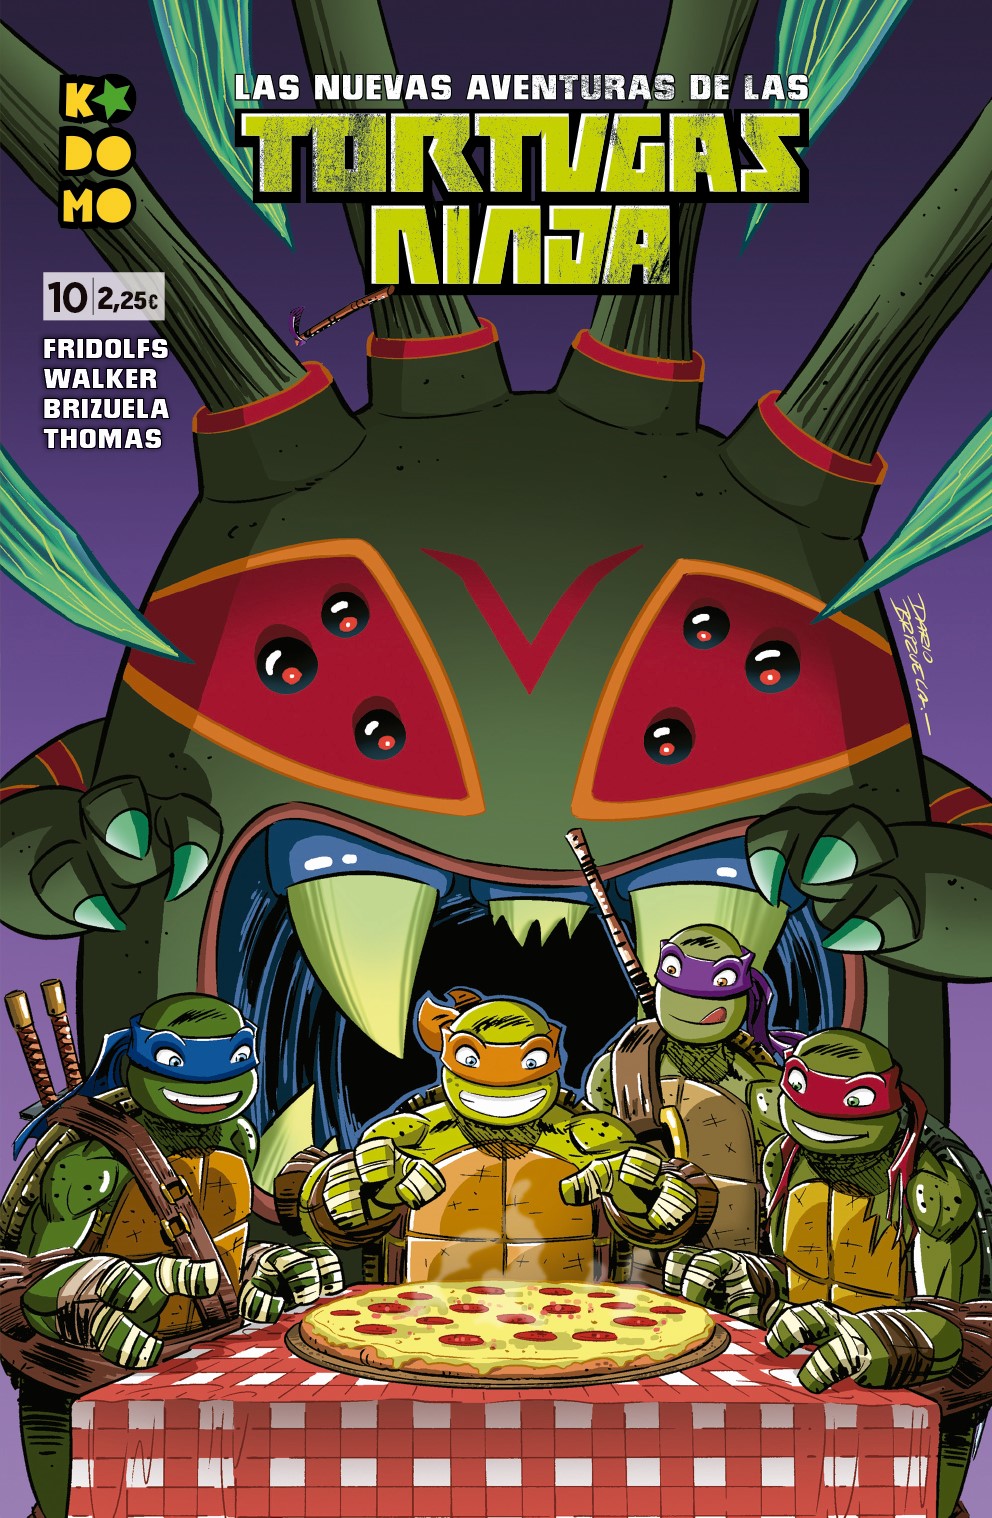 Las nuevas aventuras de las Tortugas Ninja #10